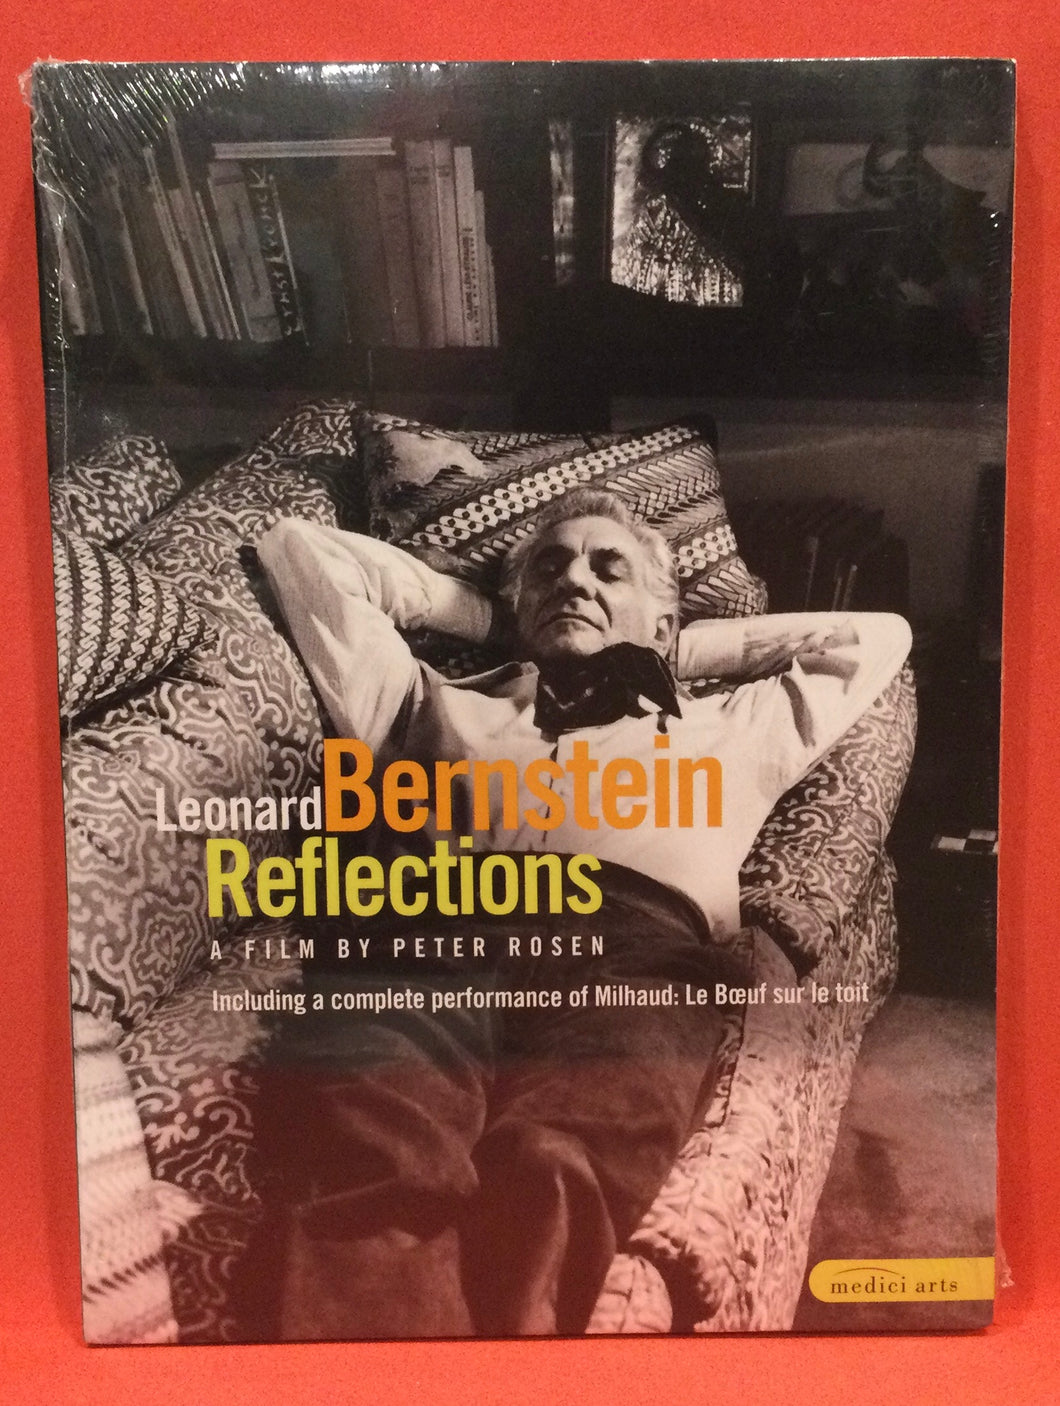 LEONARD BERNSTEIN REFLECTIONS - A FILM BY PETER ROSEN - DVD 1978 (SEALED)